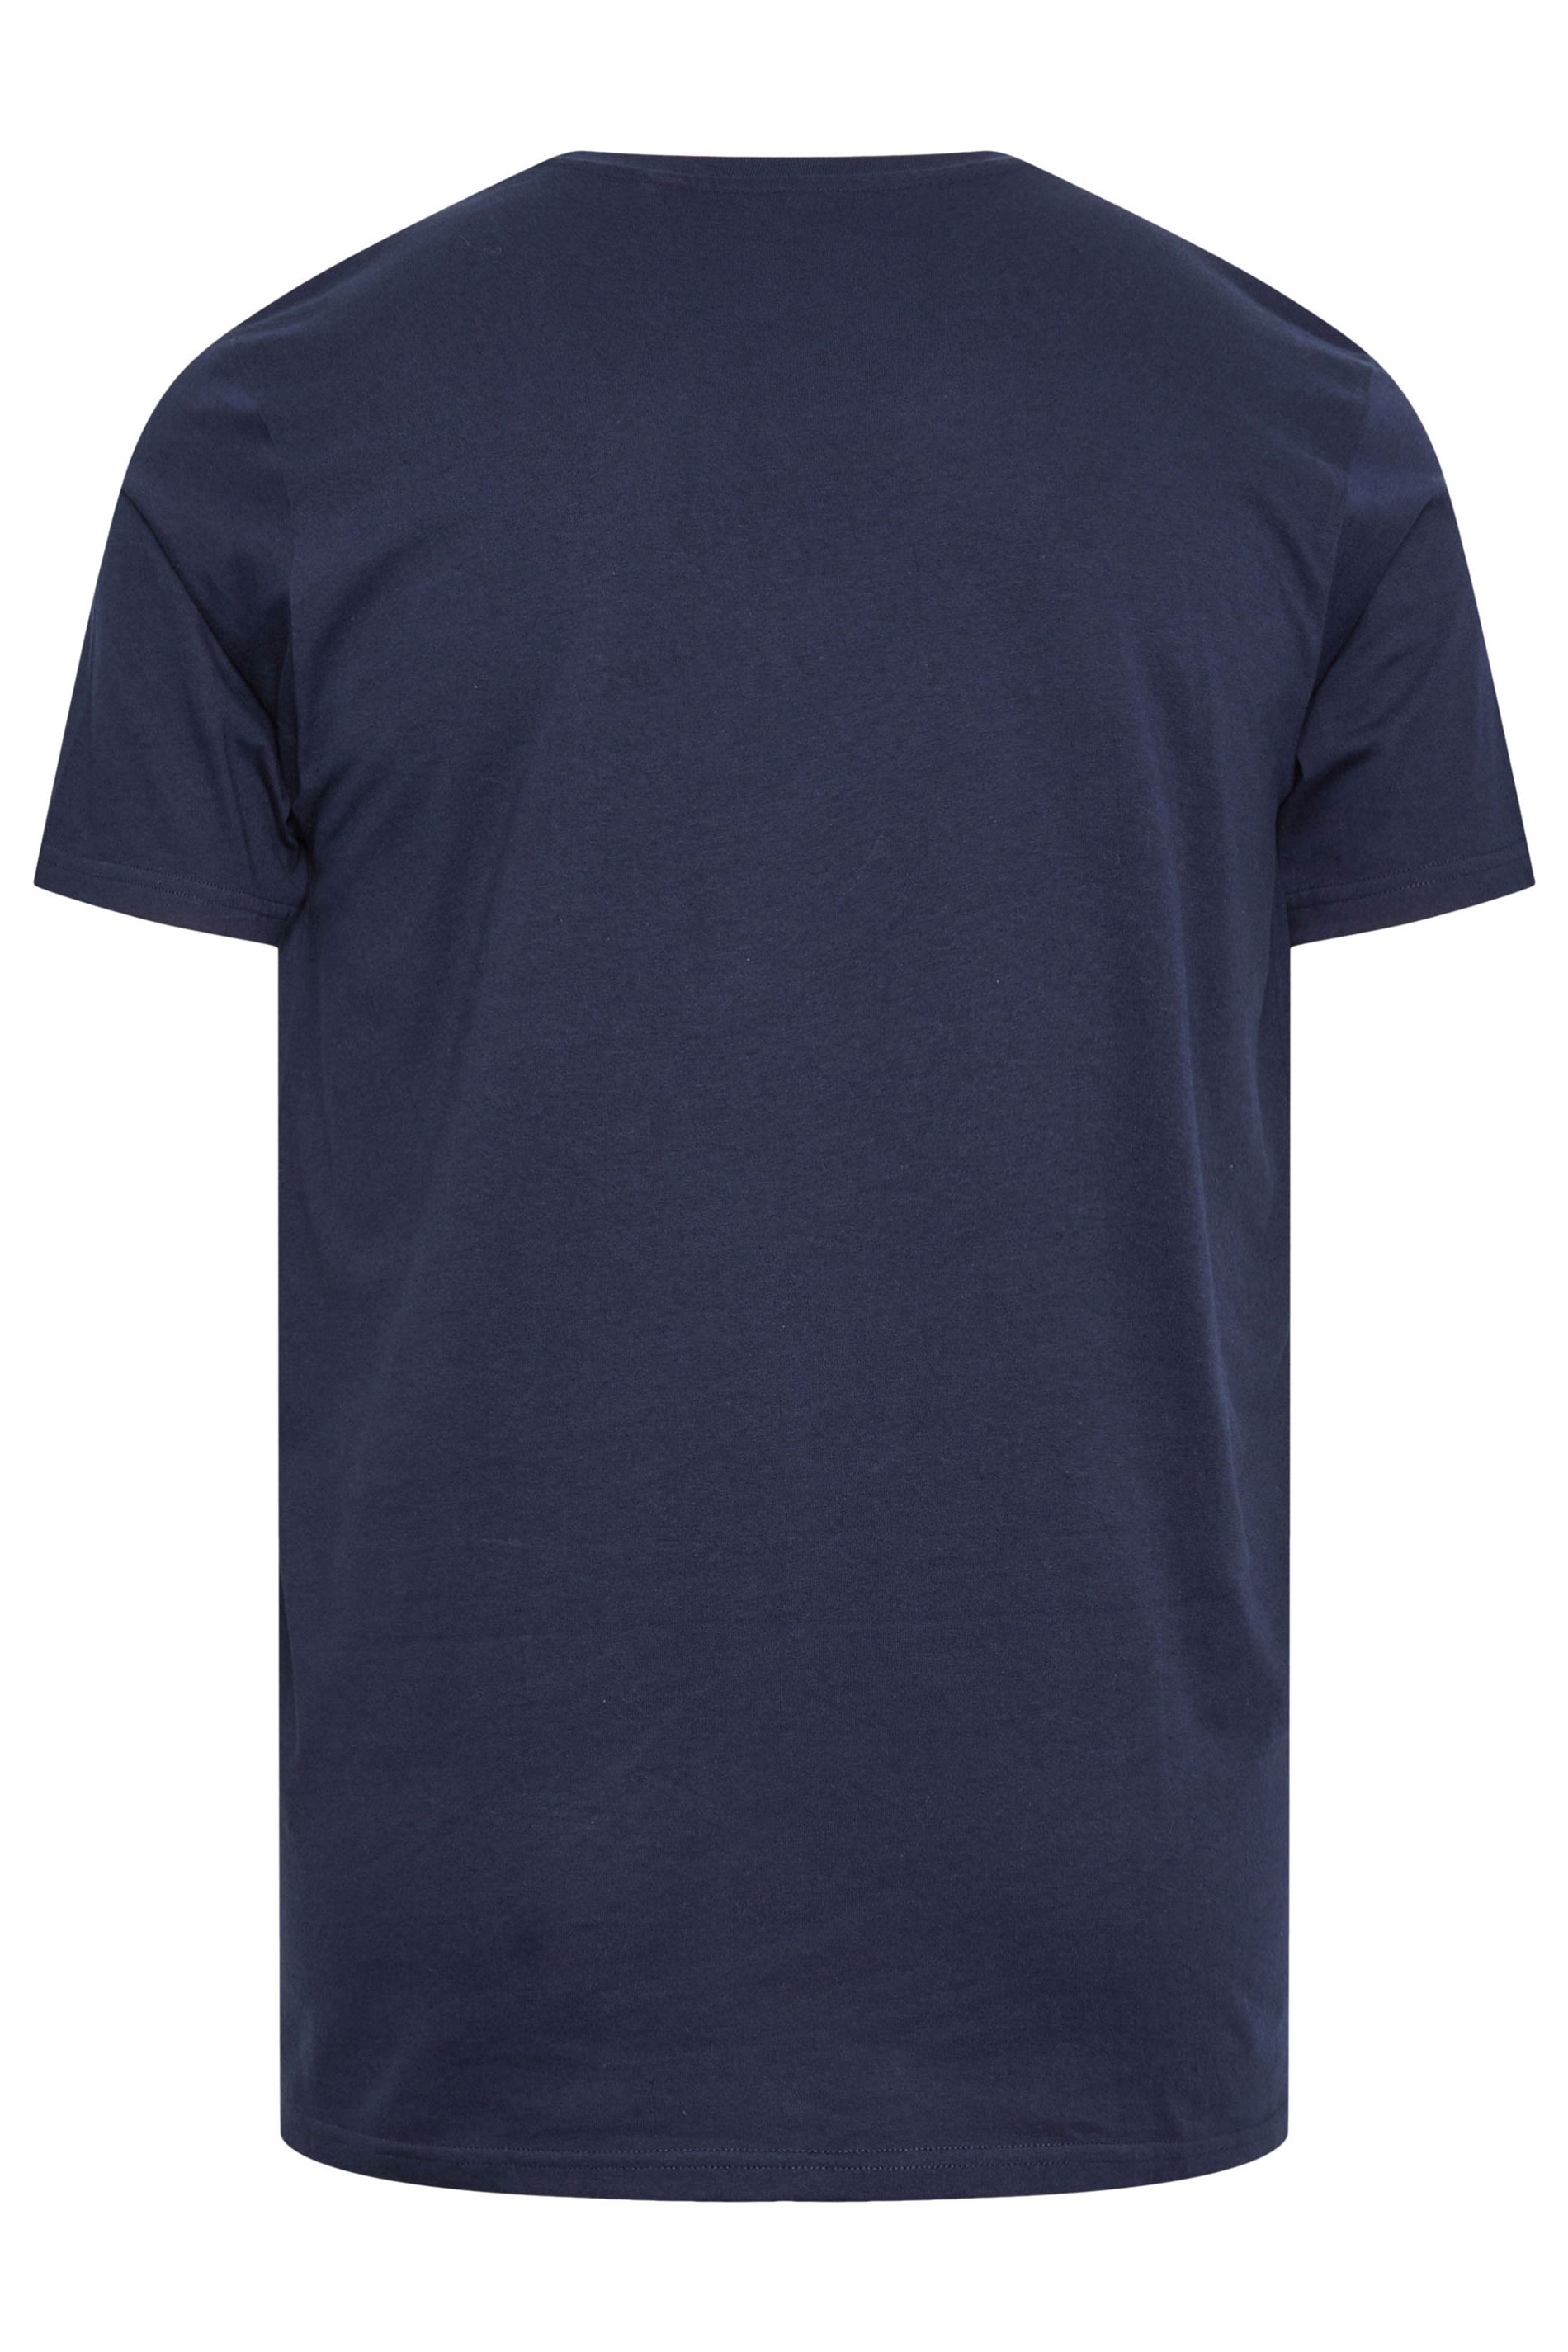 BadRhino Big & Tall Navy Blue 'Ride the Wave' Skull Slogan T-Shirt | BadRhino 3